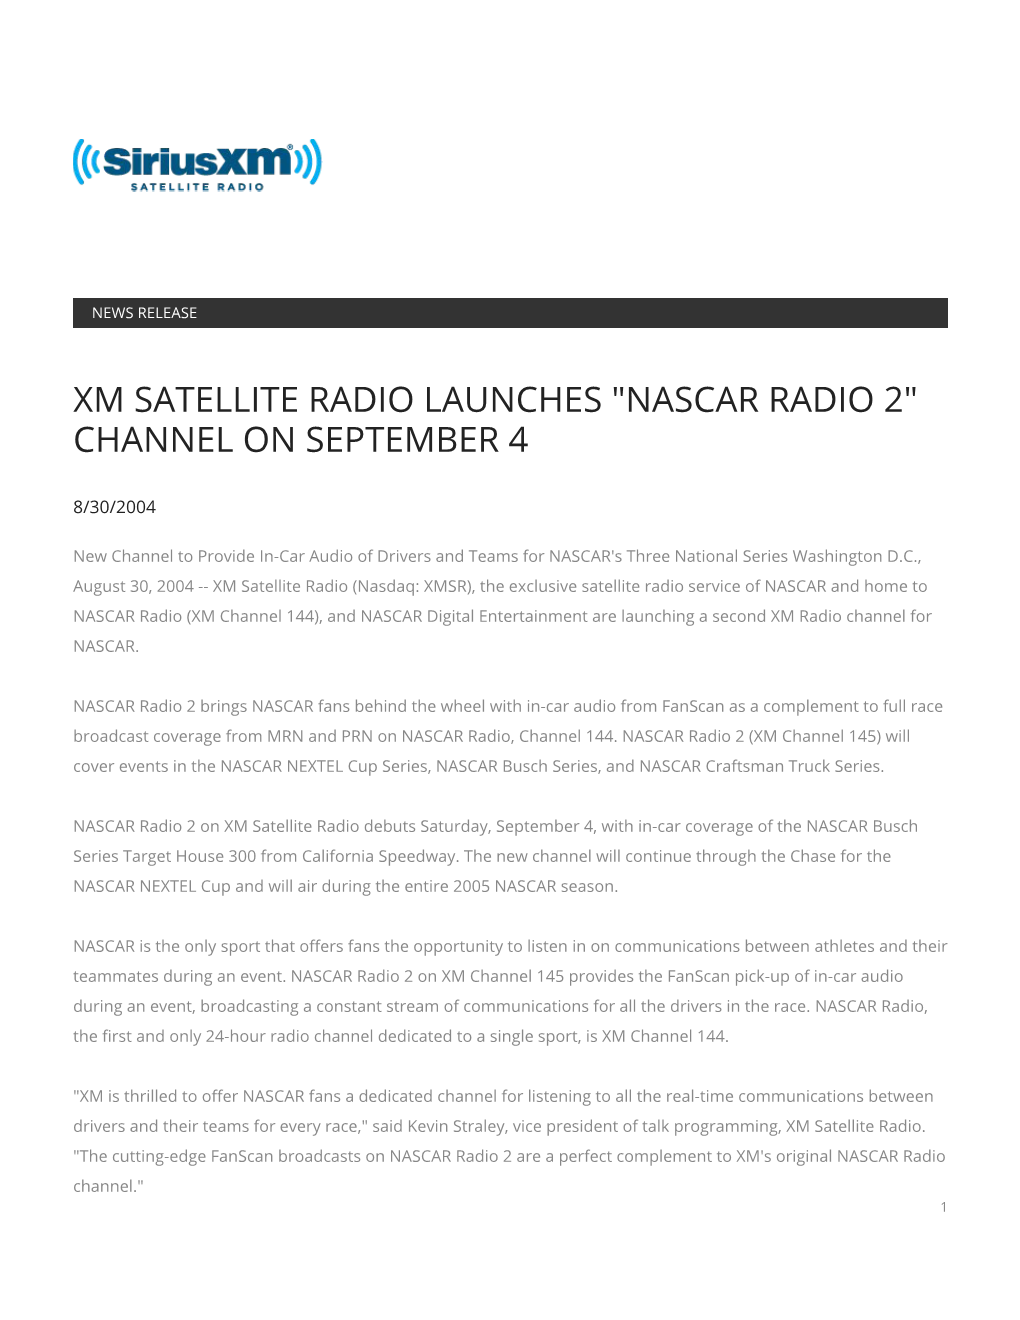 Xm Satellite Radio Launches "Nascar Radio 2" Channel on September 4